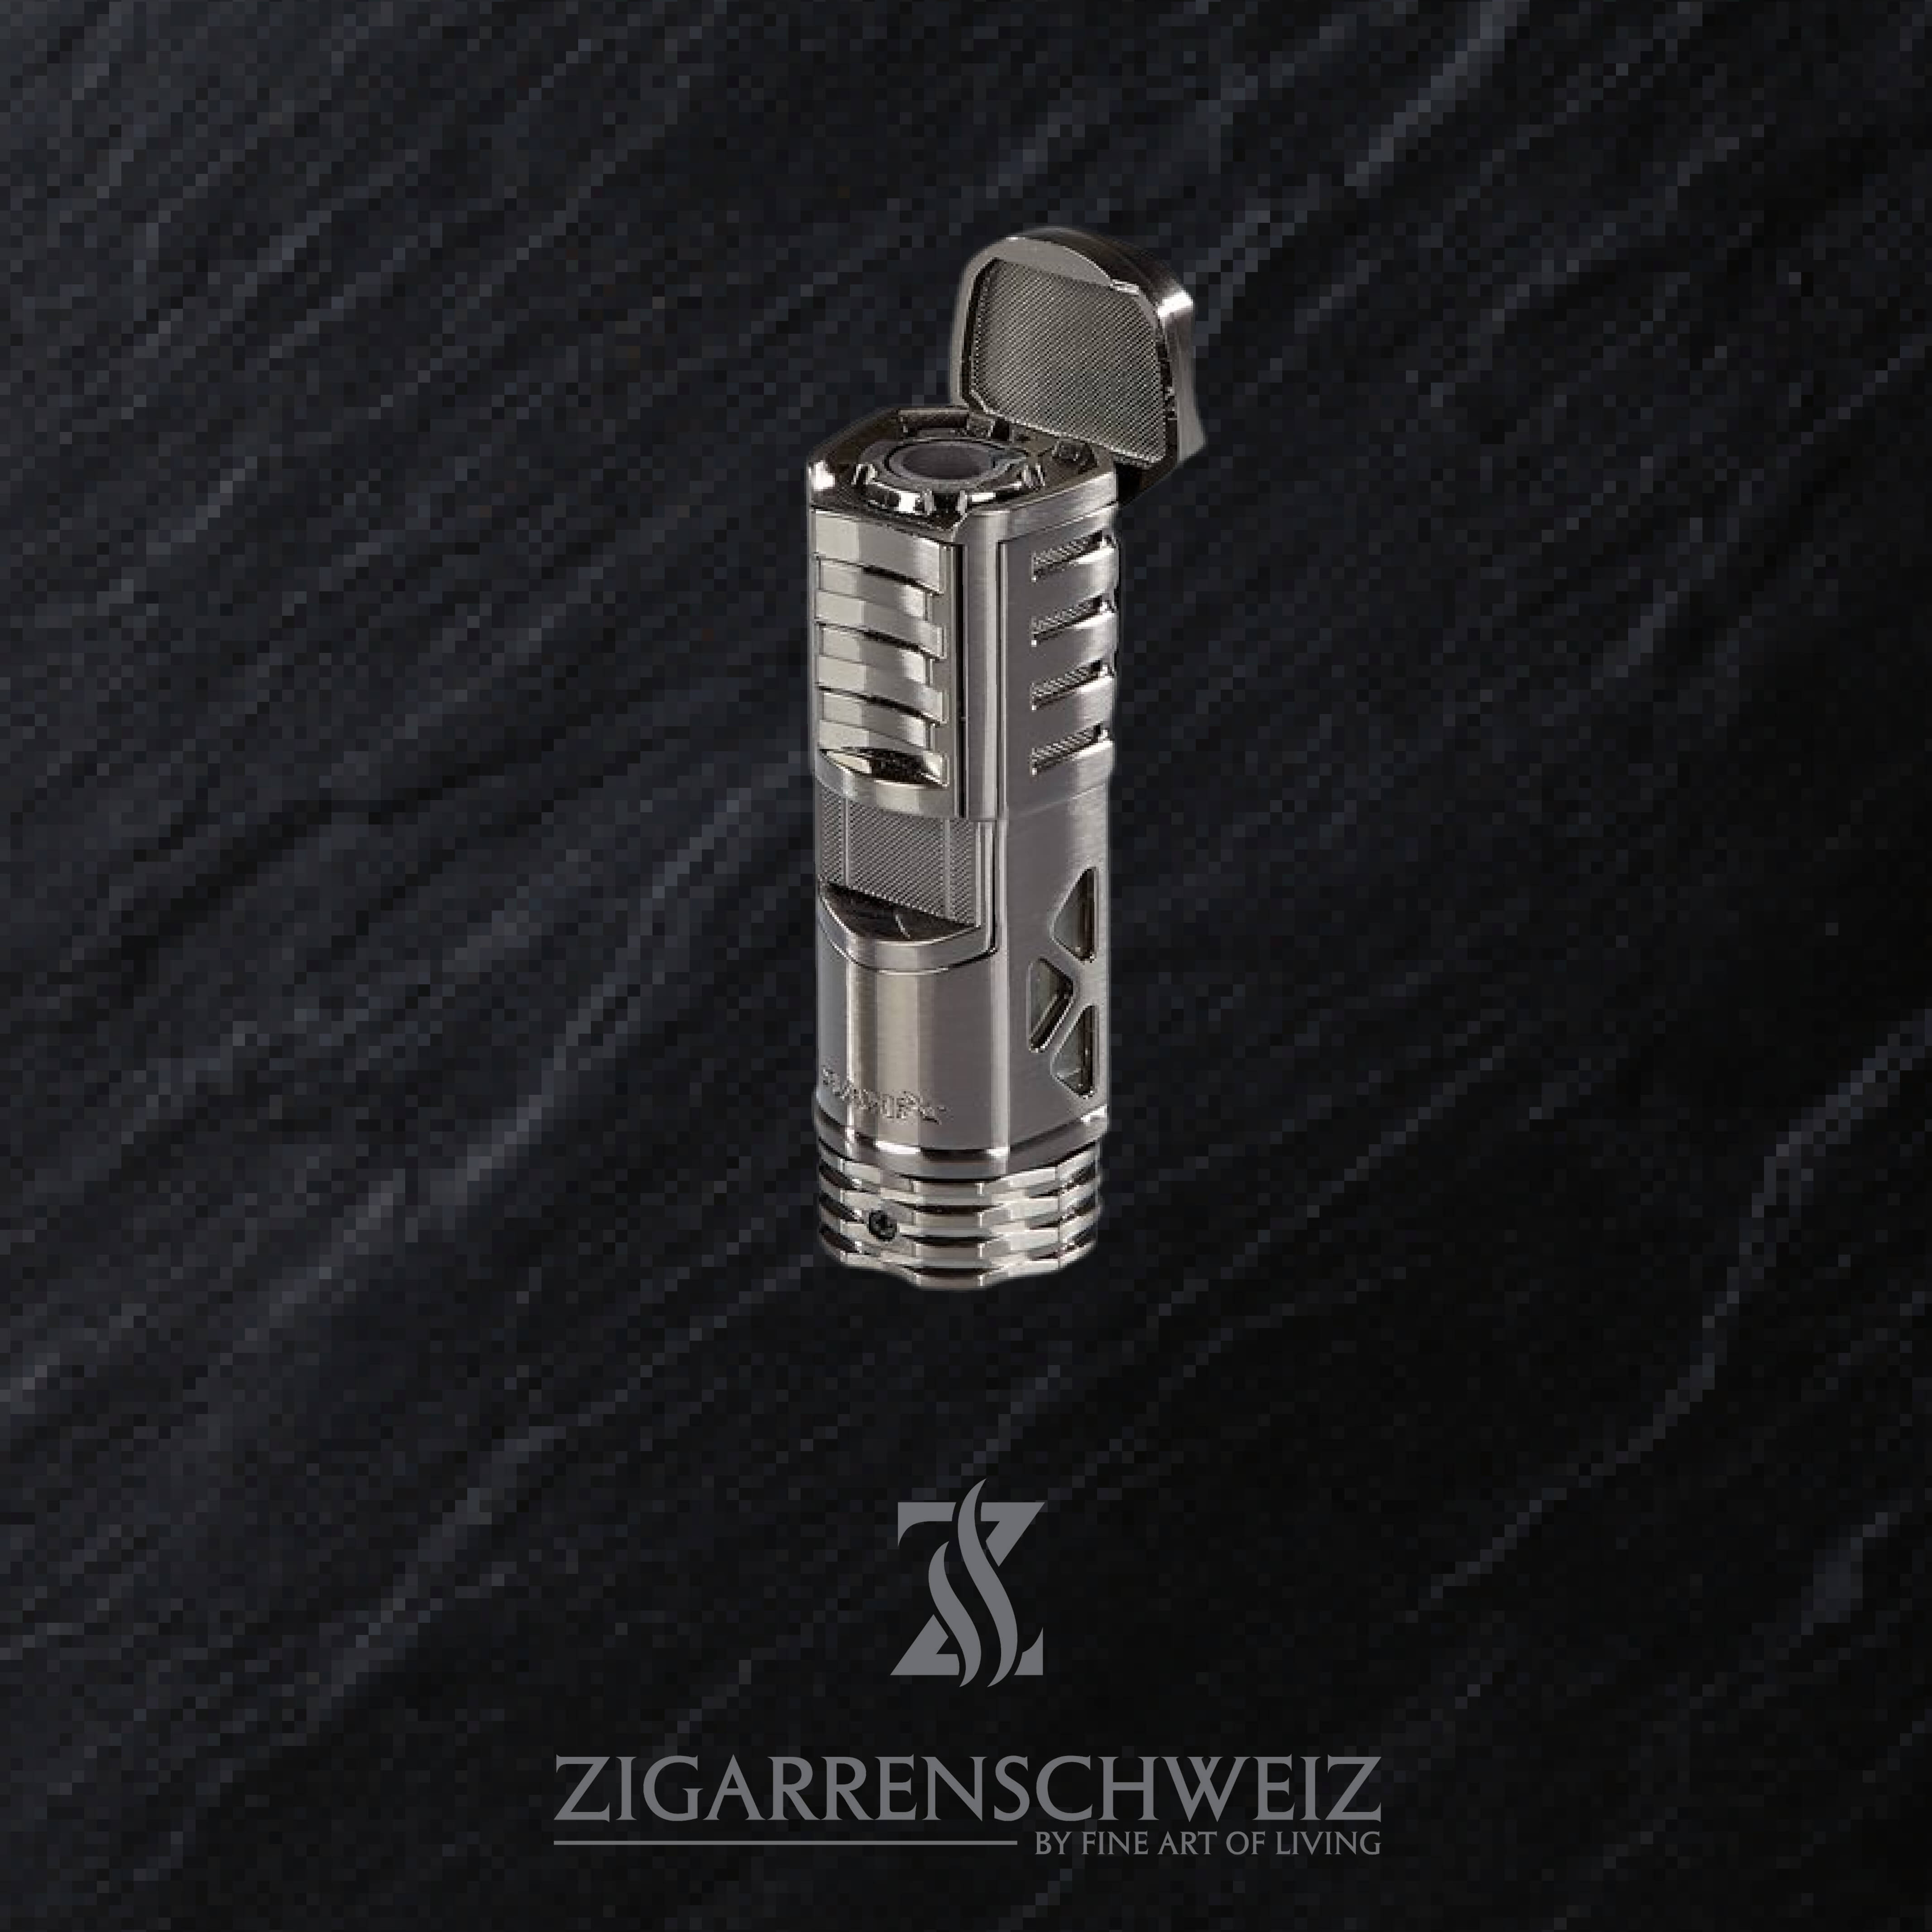 Xikar Tactical 1 Single Jet Flame Feuerzeug für Zigarren, Deckel geöffnet / Farbe: Gun Metal